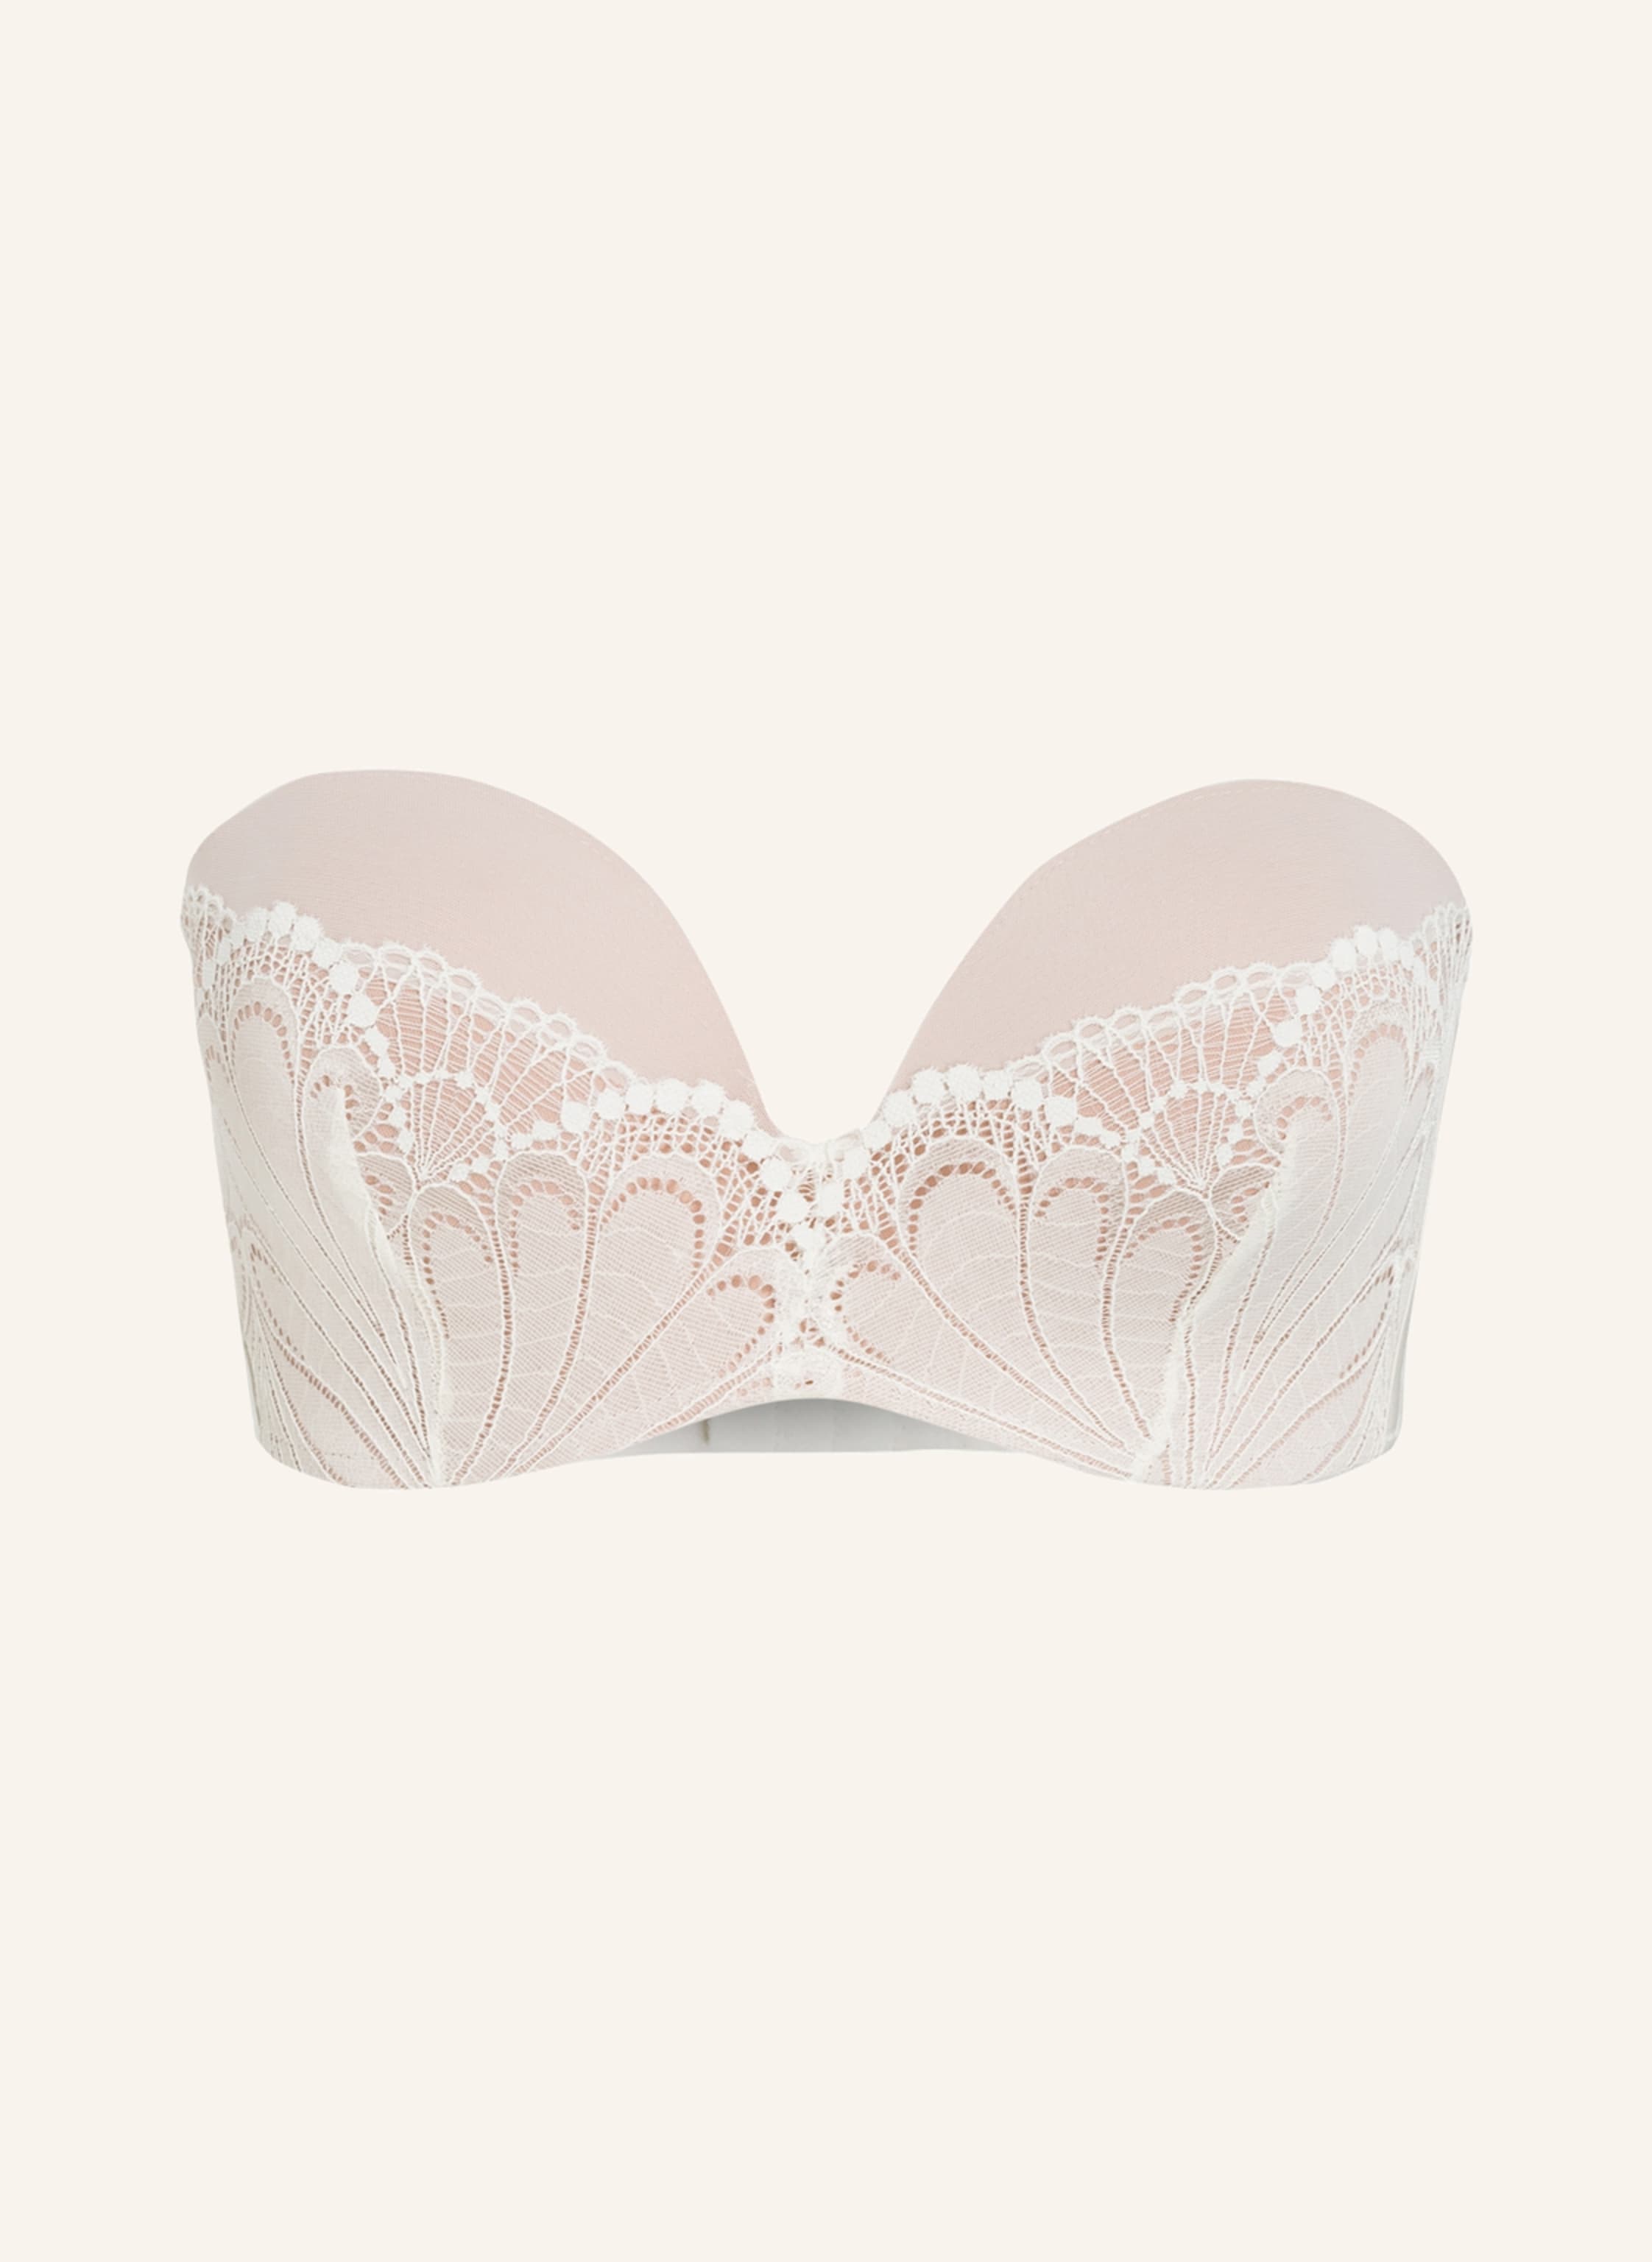 wonderbra Push-up bra Glamor PERFECT in cream